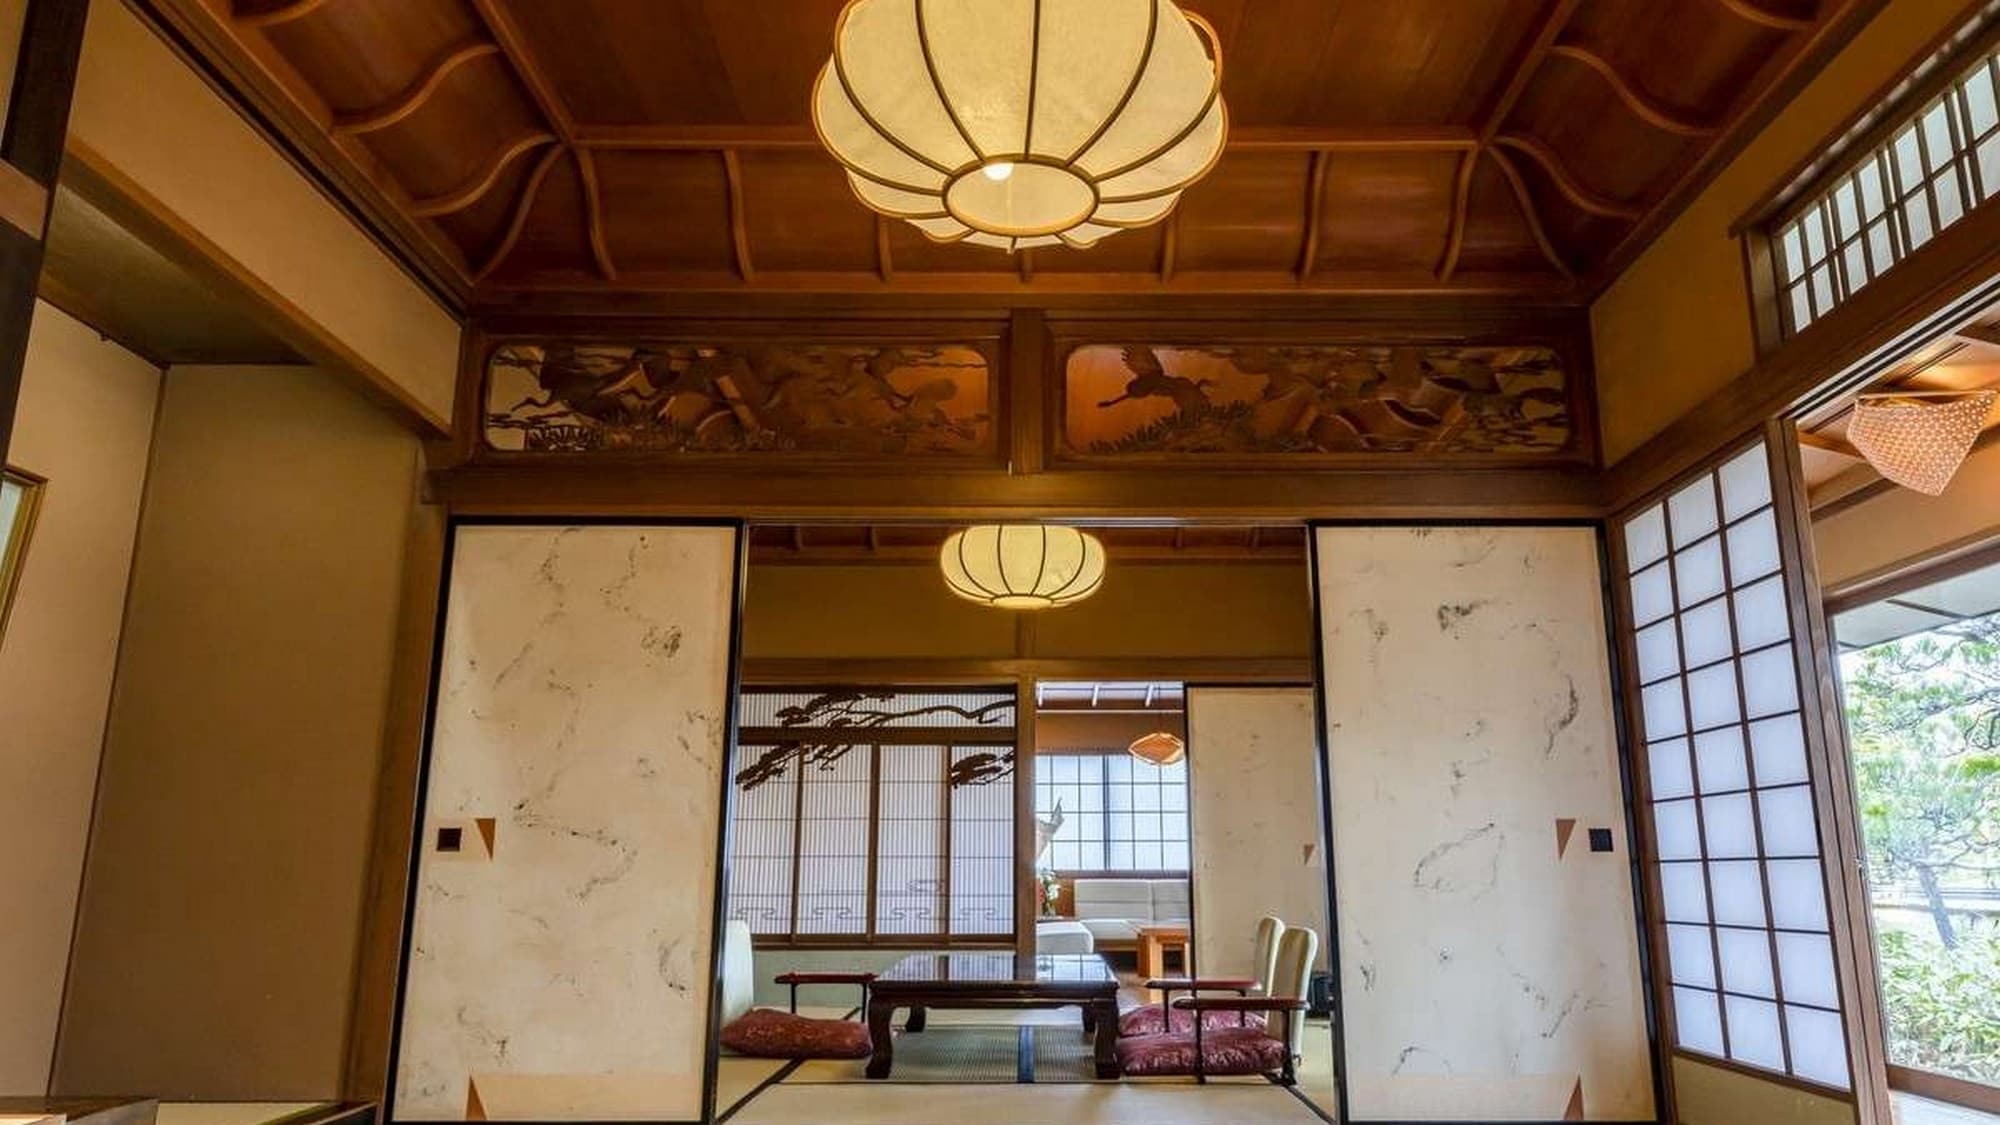 Senkeien "Hinoki" Lattice ceiling is beautiful, a Japanese setting unique to Japan.